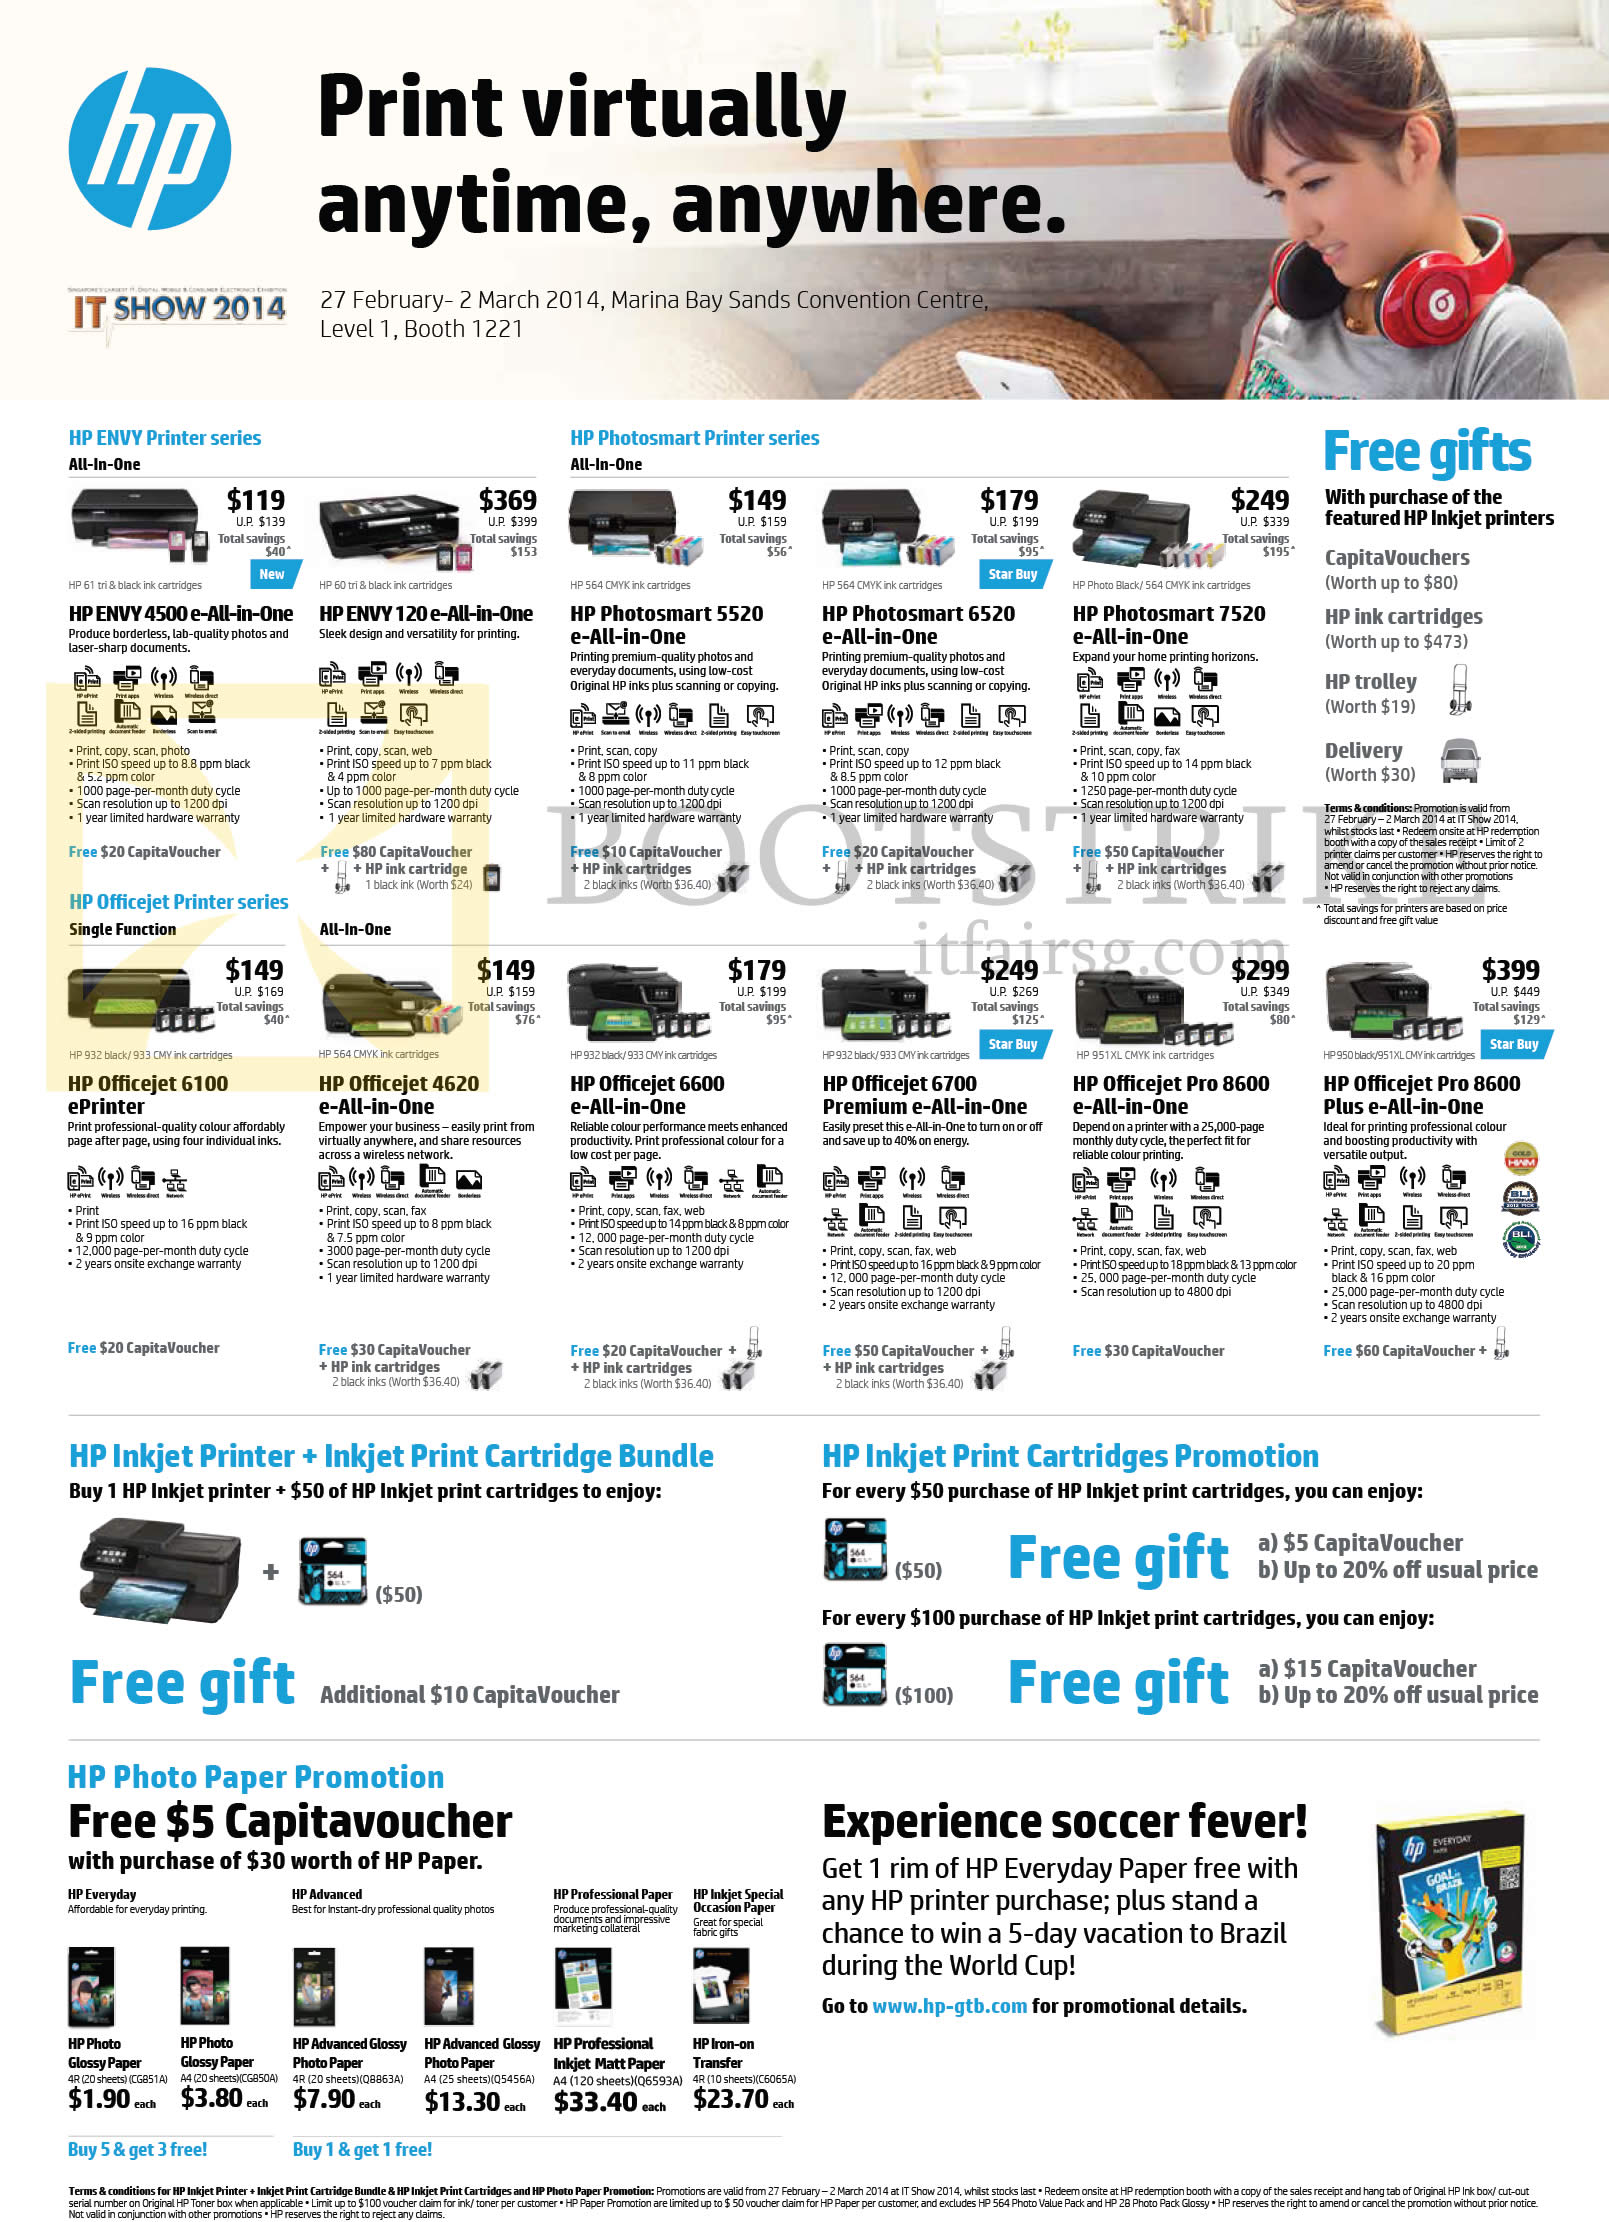 IT SHOW 2014 price list image brochure of HP Printers, Paper, Envy 4500, 120, Photosmart 5520, 6520, 7520, Officejet 6100, 4620, 6600, 6700, Pro 8600